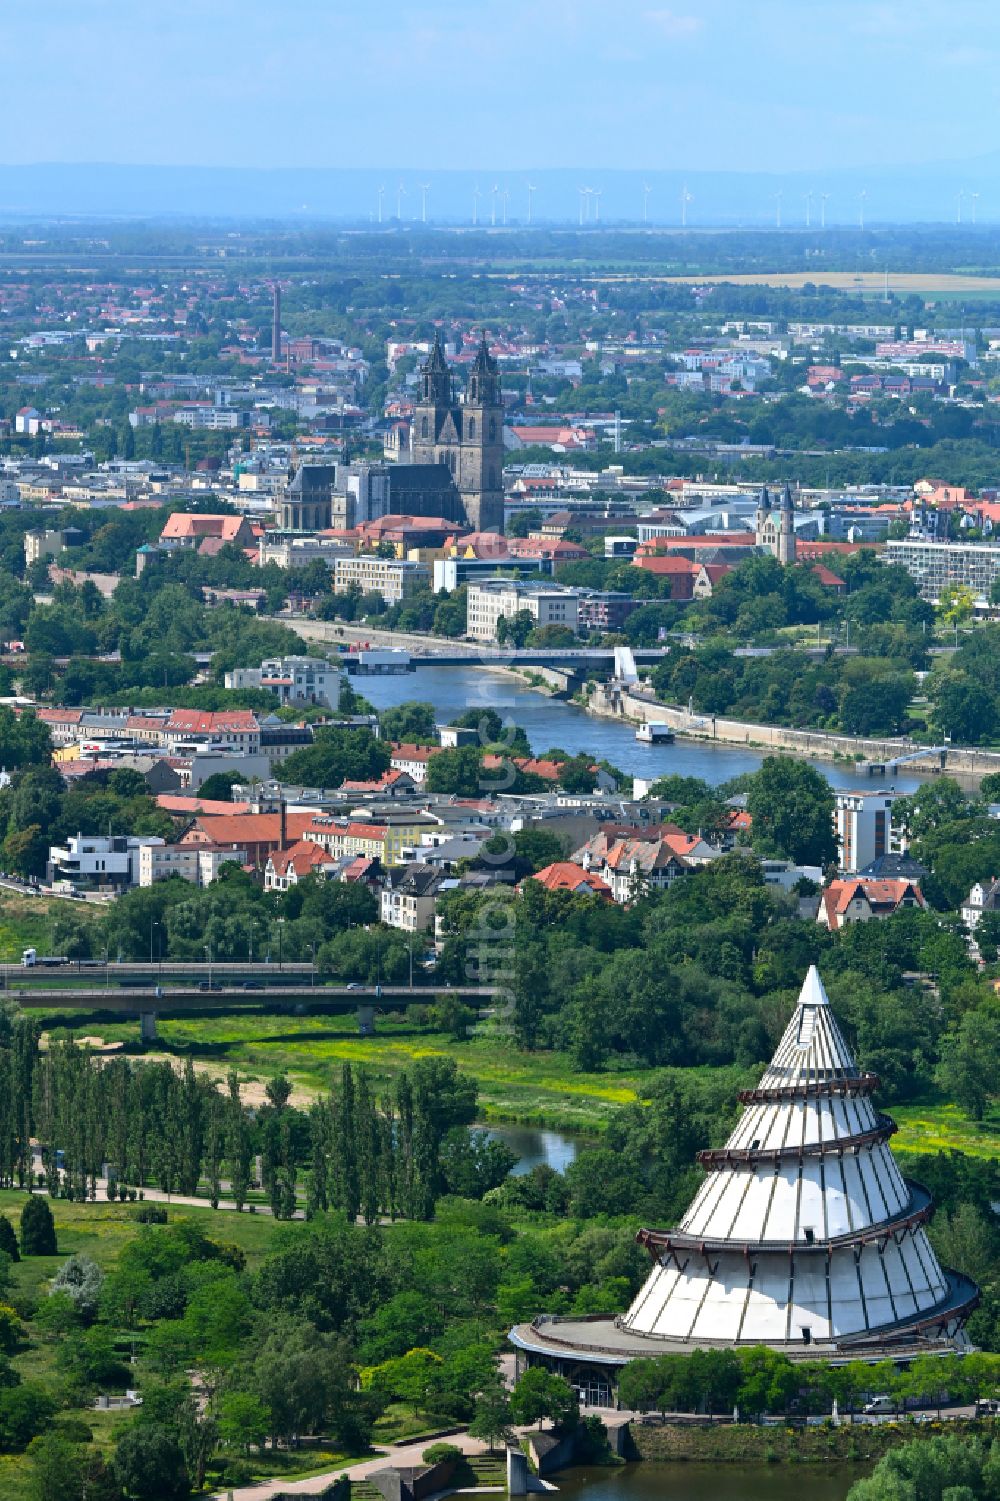 Luftaufnahme Magdeburg - Aussichtsturm Jahrtausendturm Magdeburg im Ortsteil Herrenkrug in Magdeburg im Bundesland Sachsen-Anhalt, Deutschland